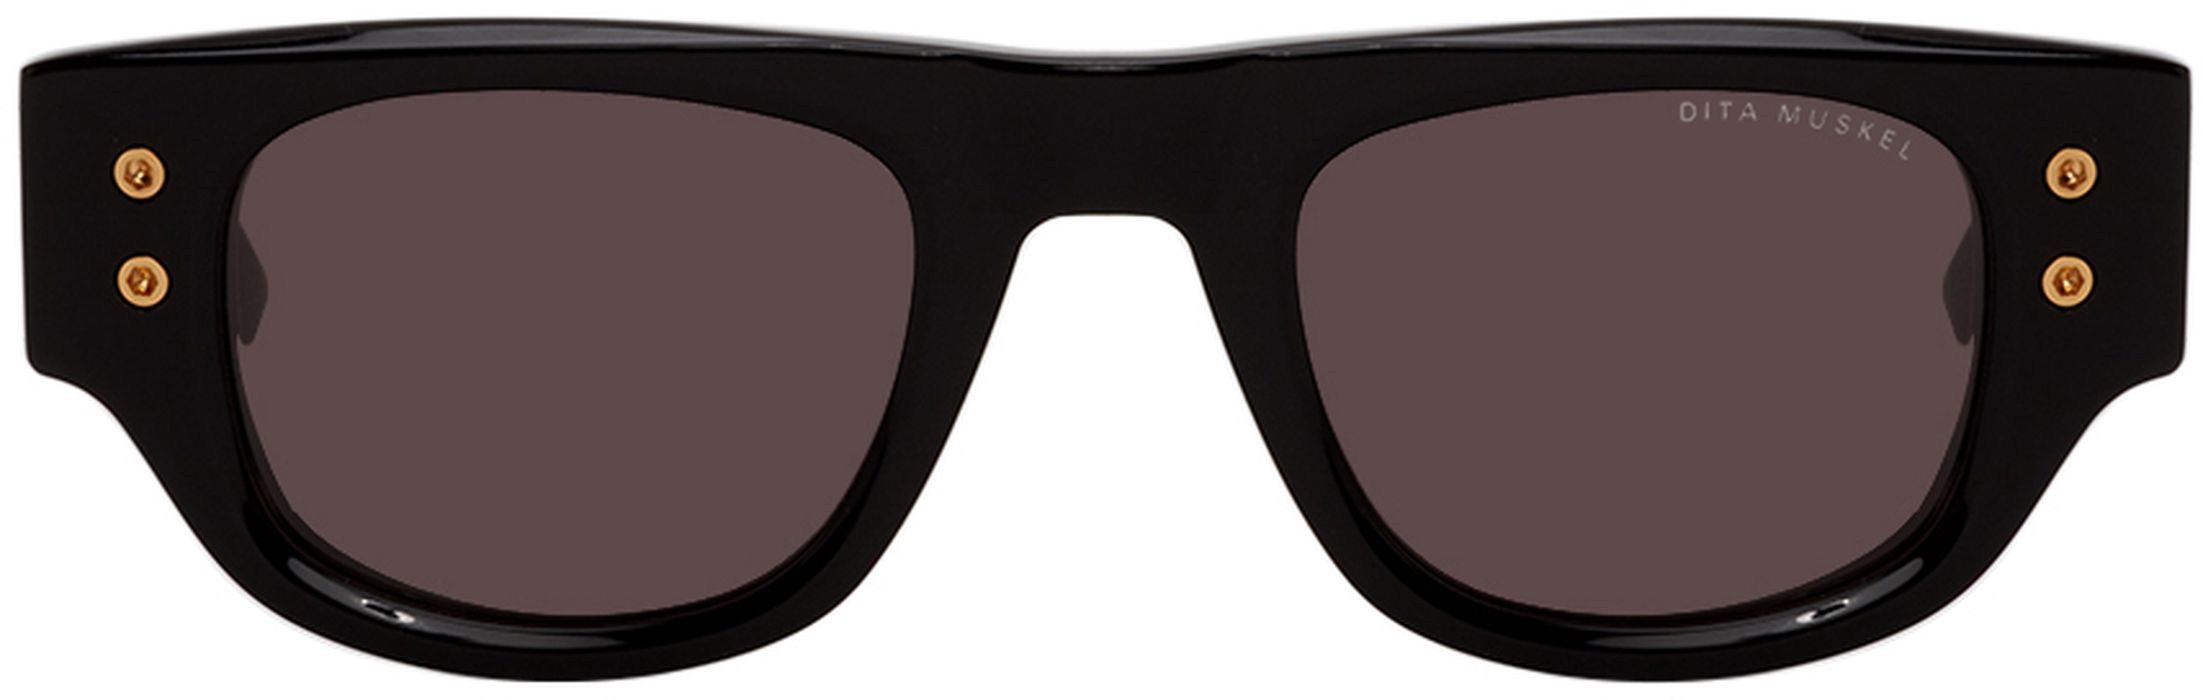 Dita Black & Grey Muskel Sunglasses